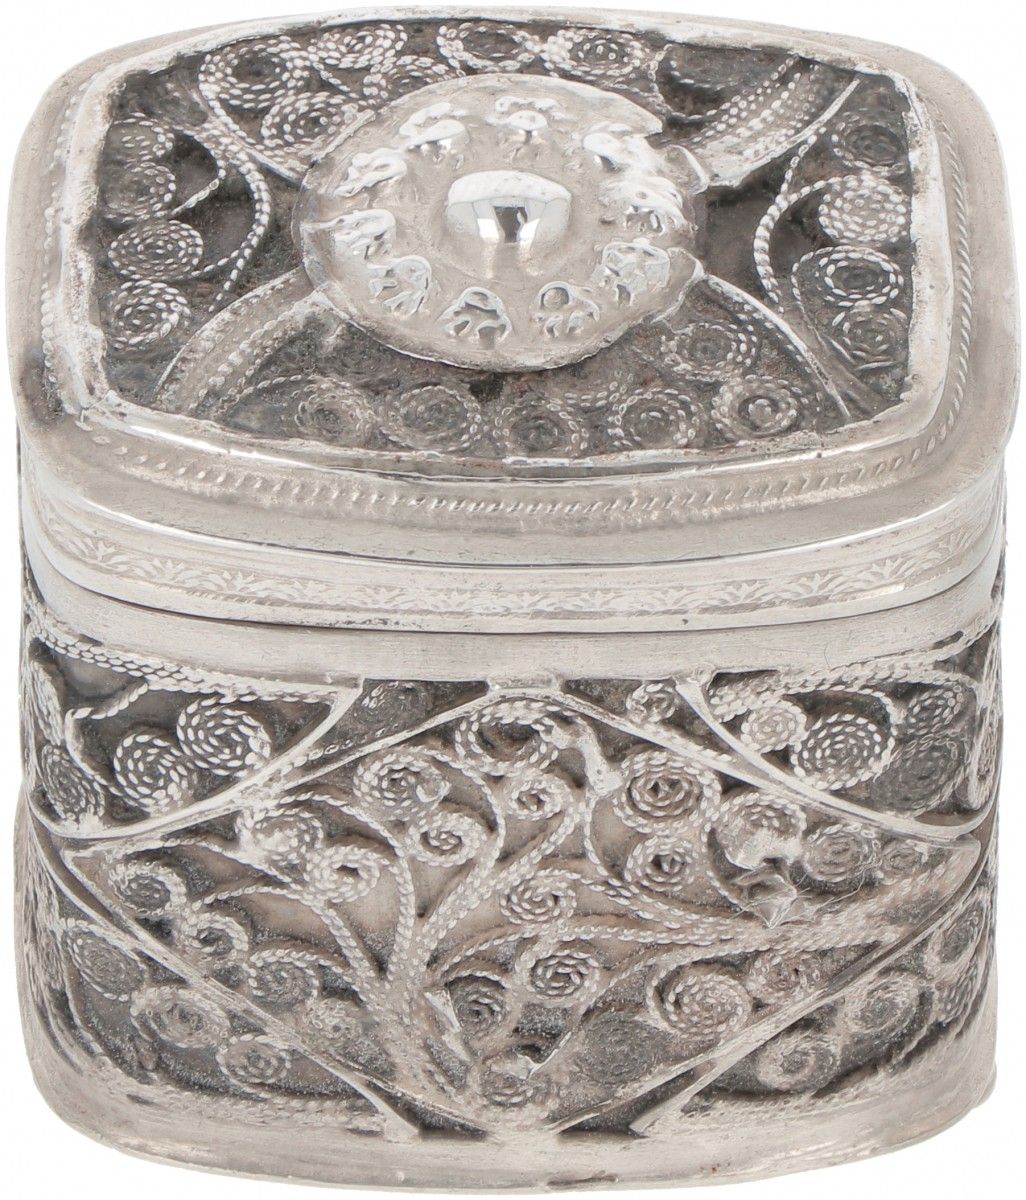 Loderein box silver. Con decorazioni in filigrana saldate. Paesi Bassi, Schoonho&hellip;